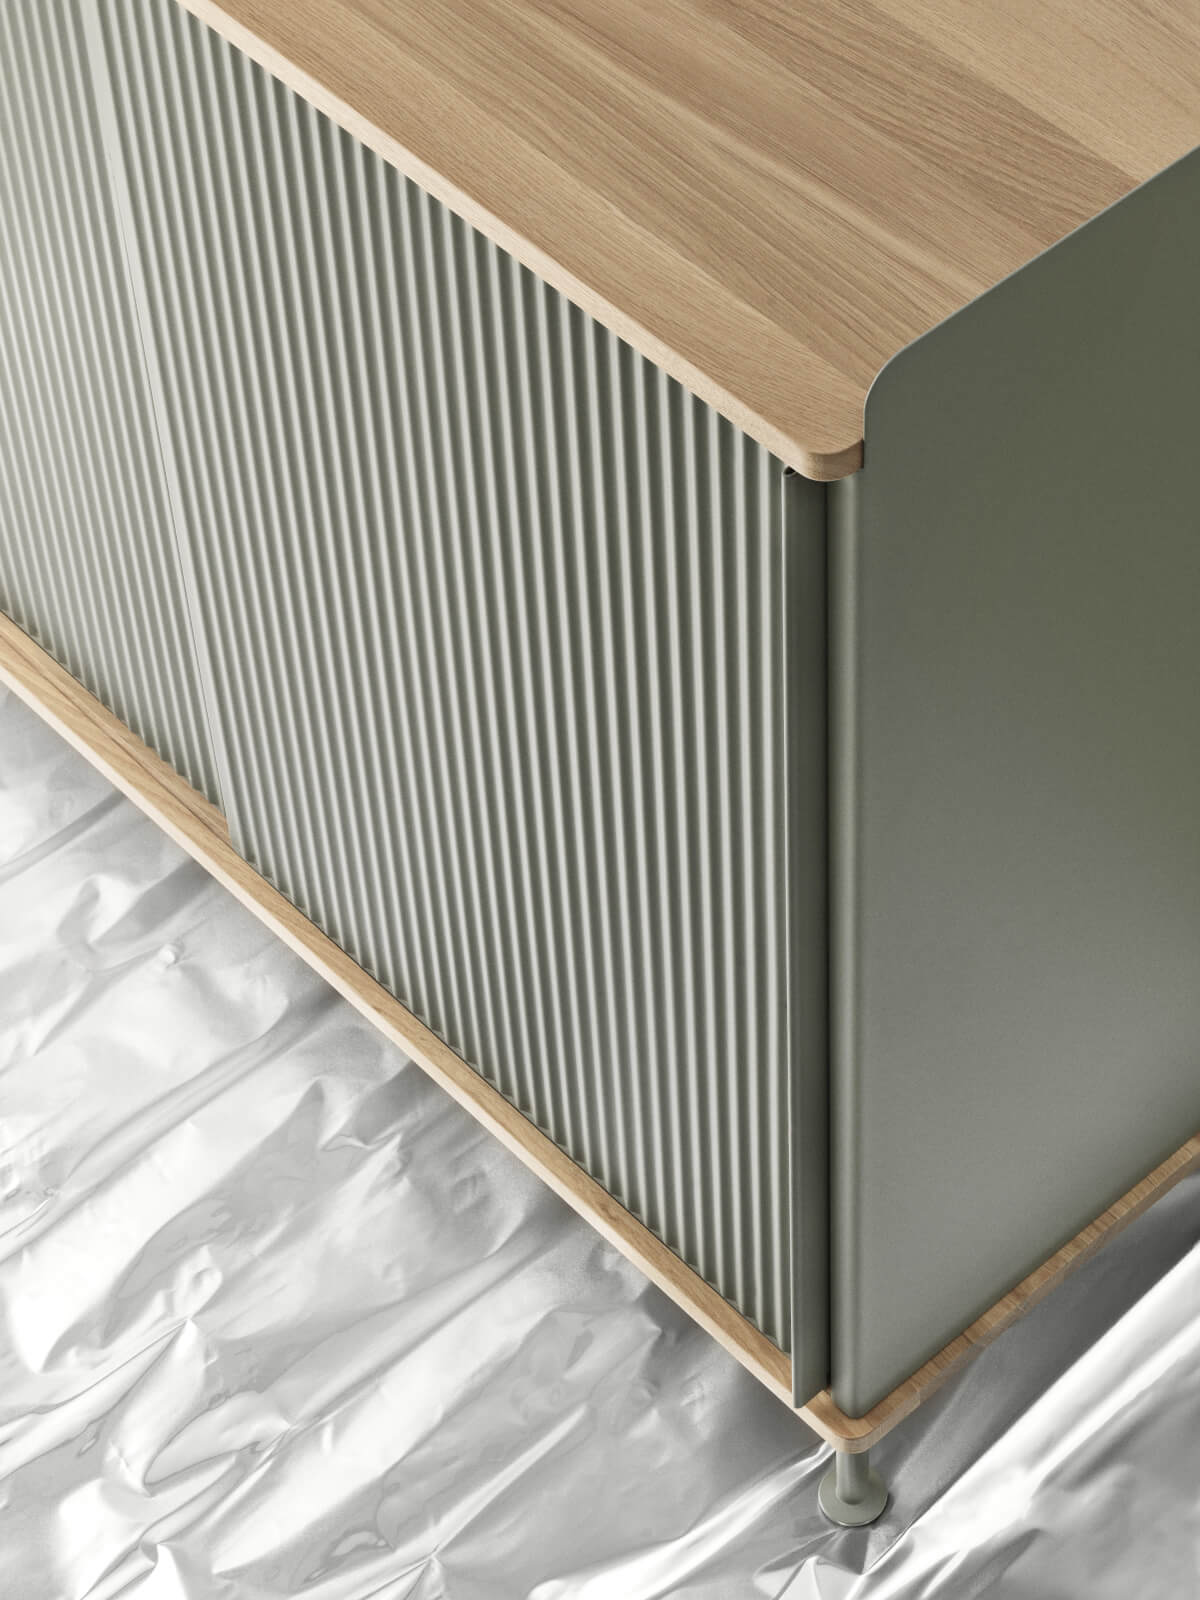 Enfold Sideboard, 186 x 48 cm, eiche geölt / dusty green